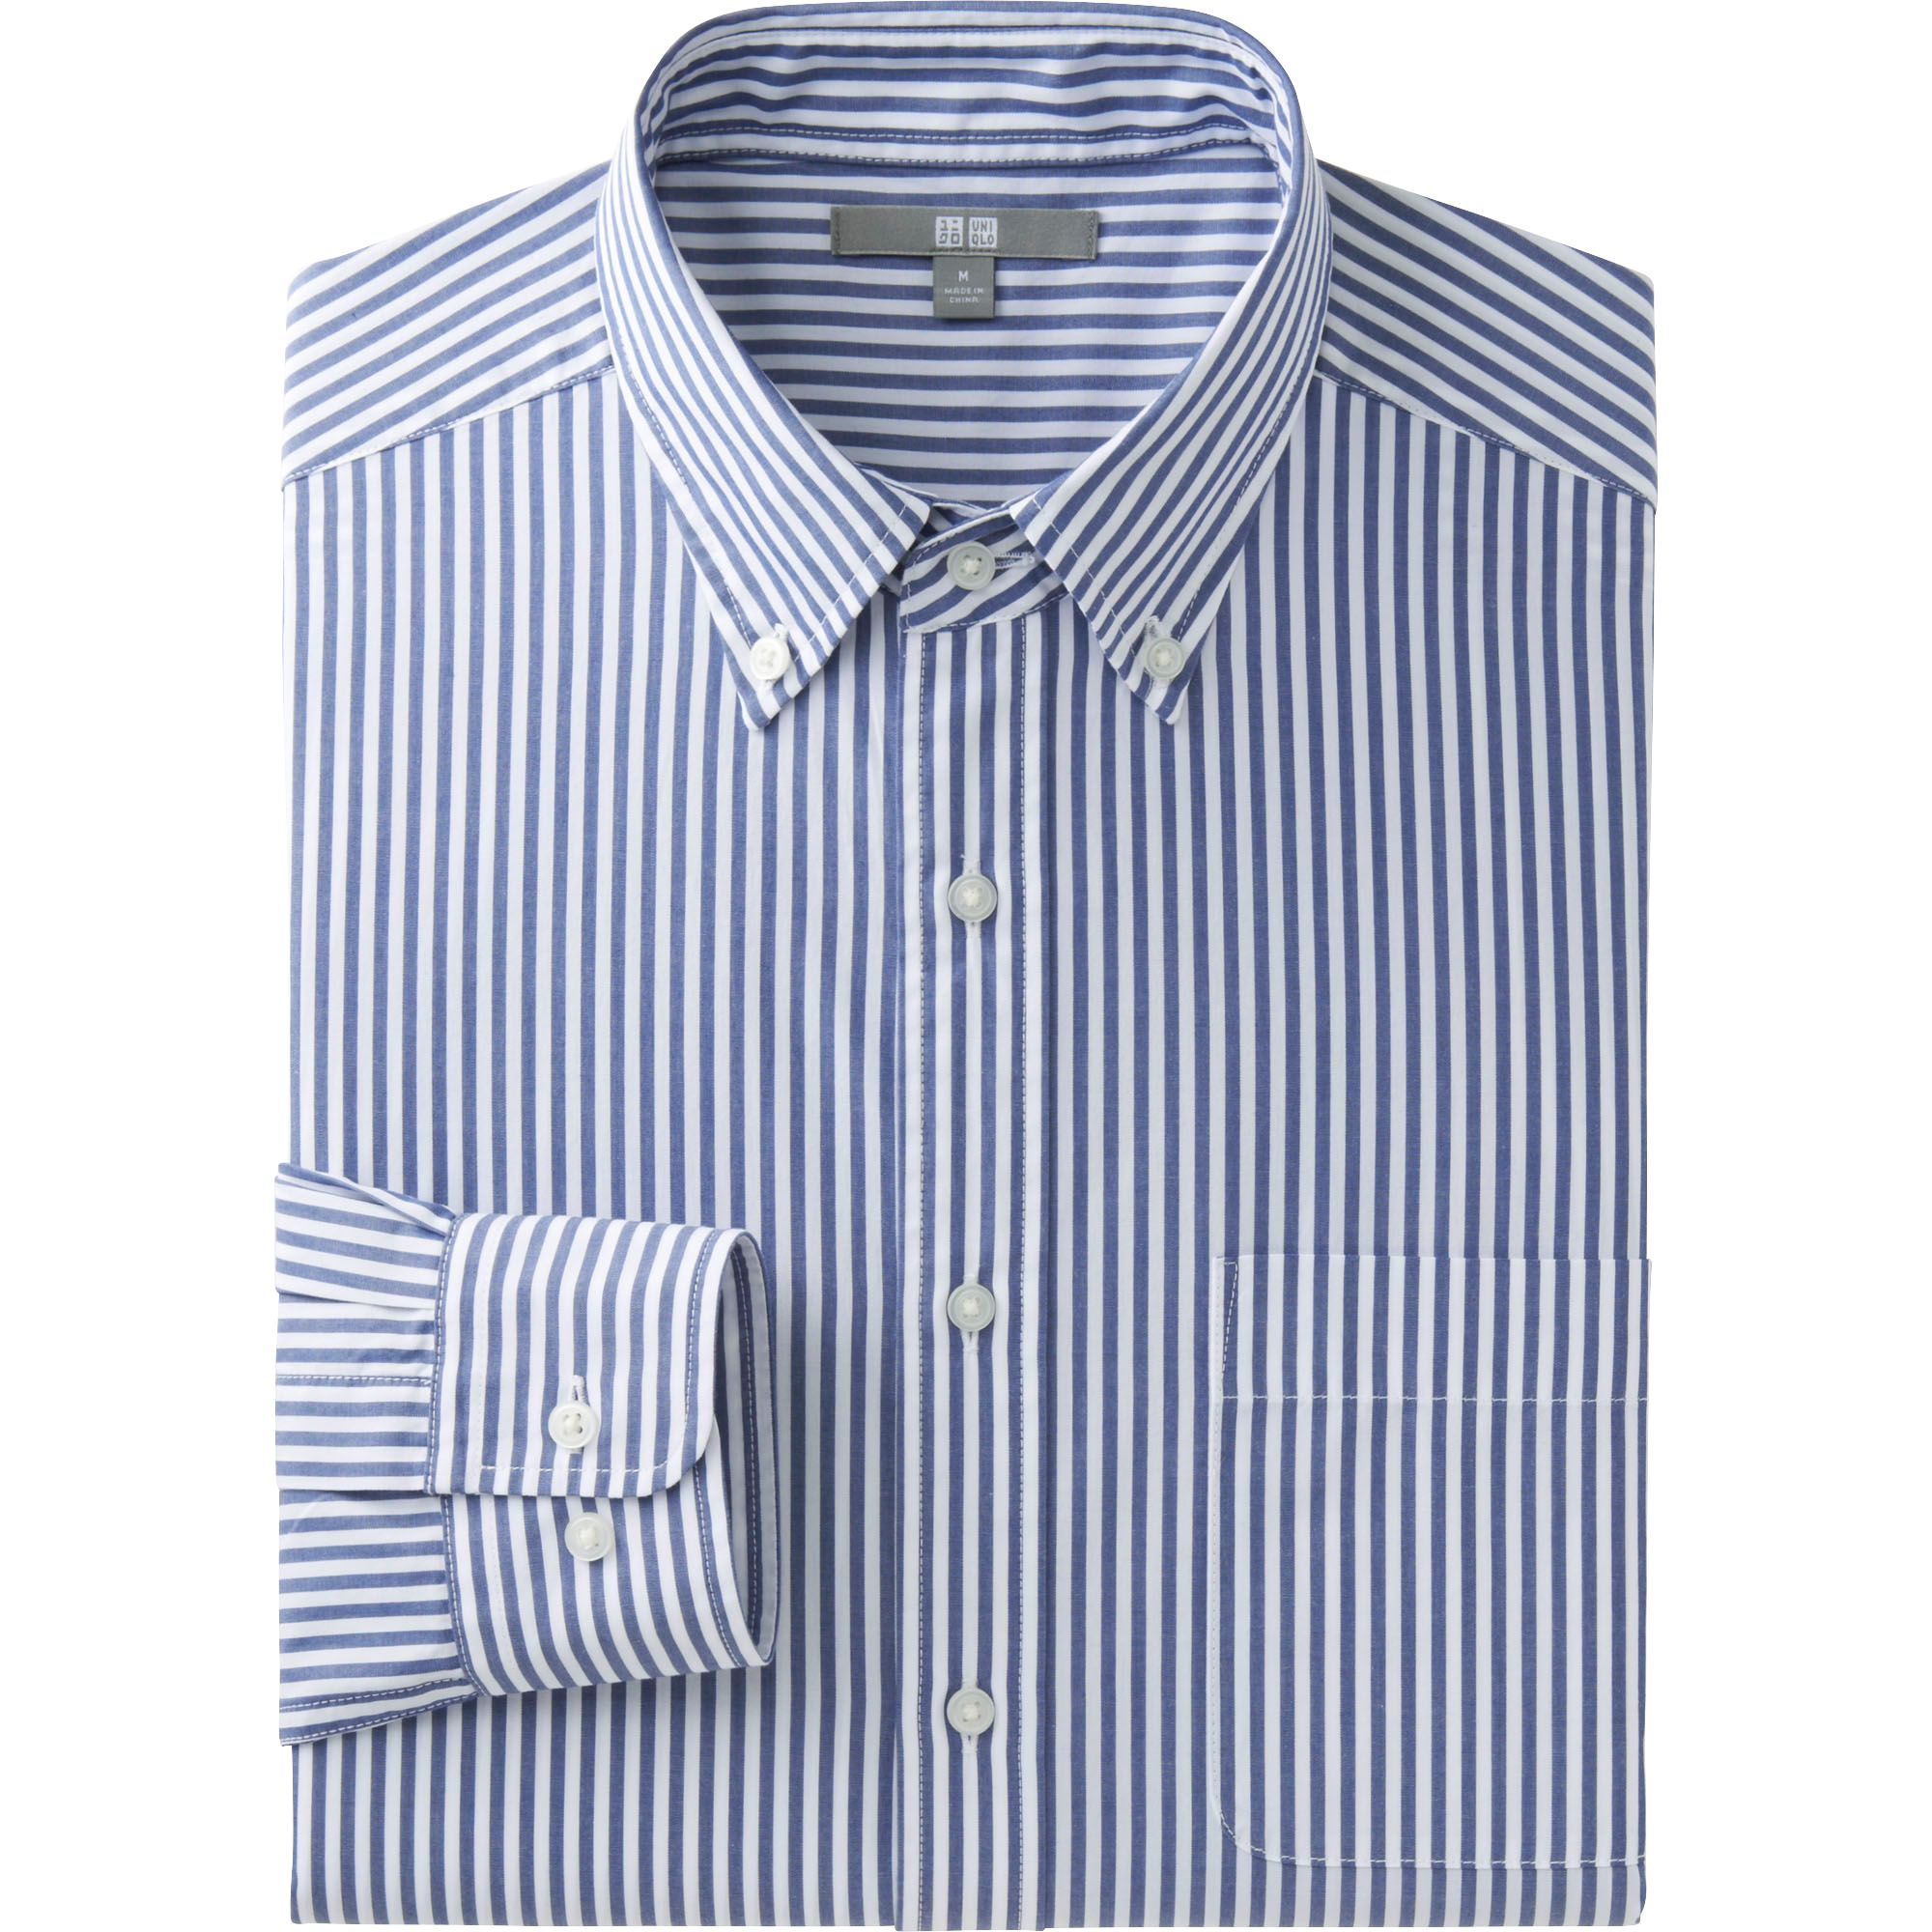 Uniqlo striped long sleeve shirt boys online – Women’s T Shirts | Gap